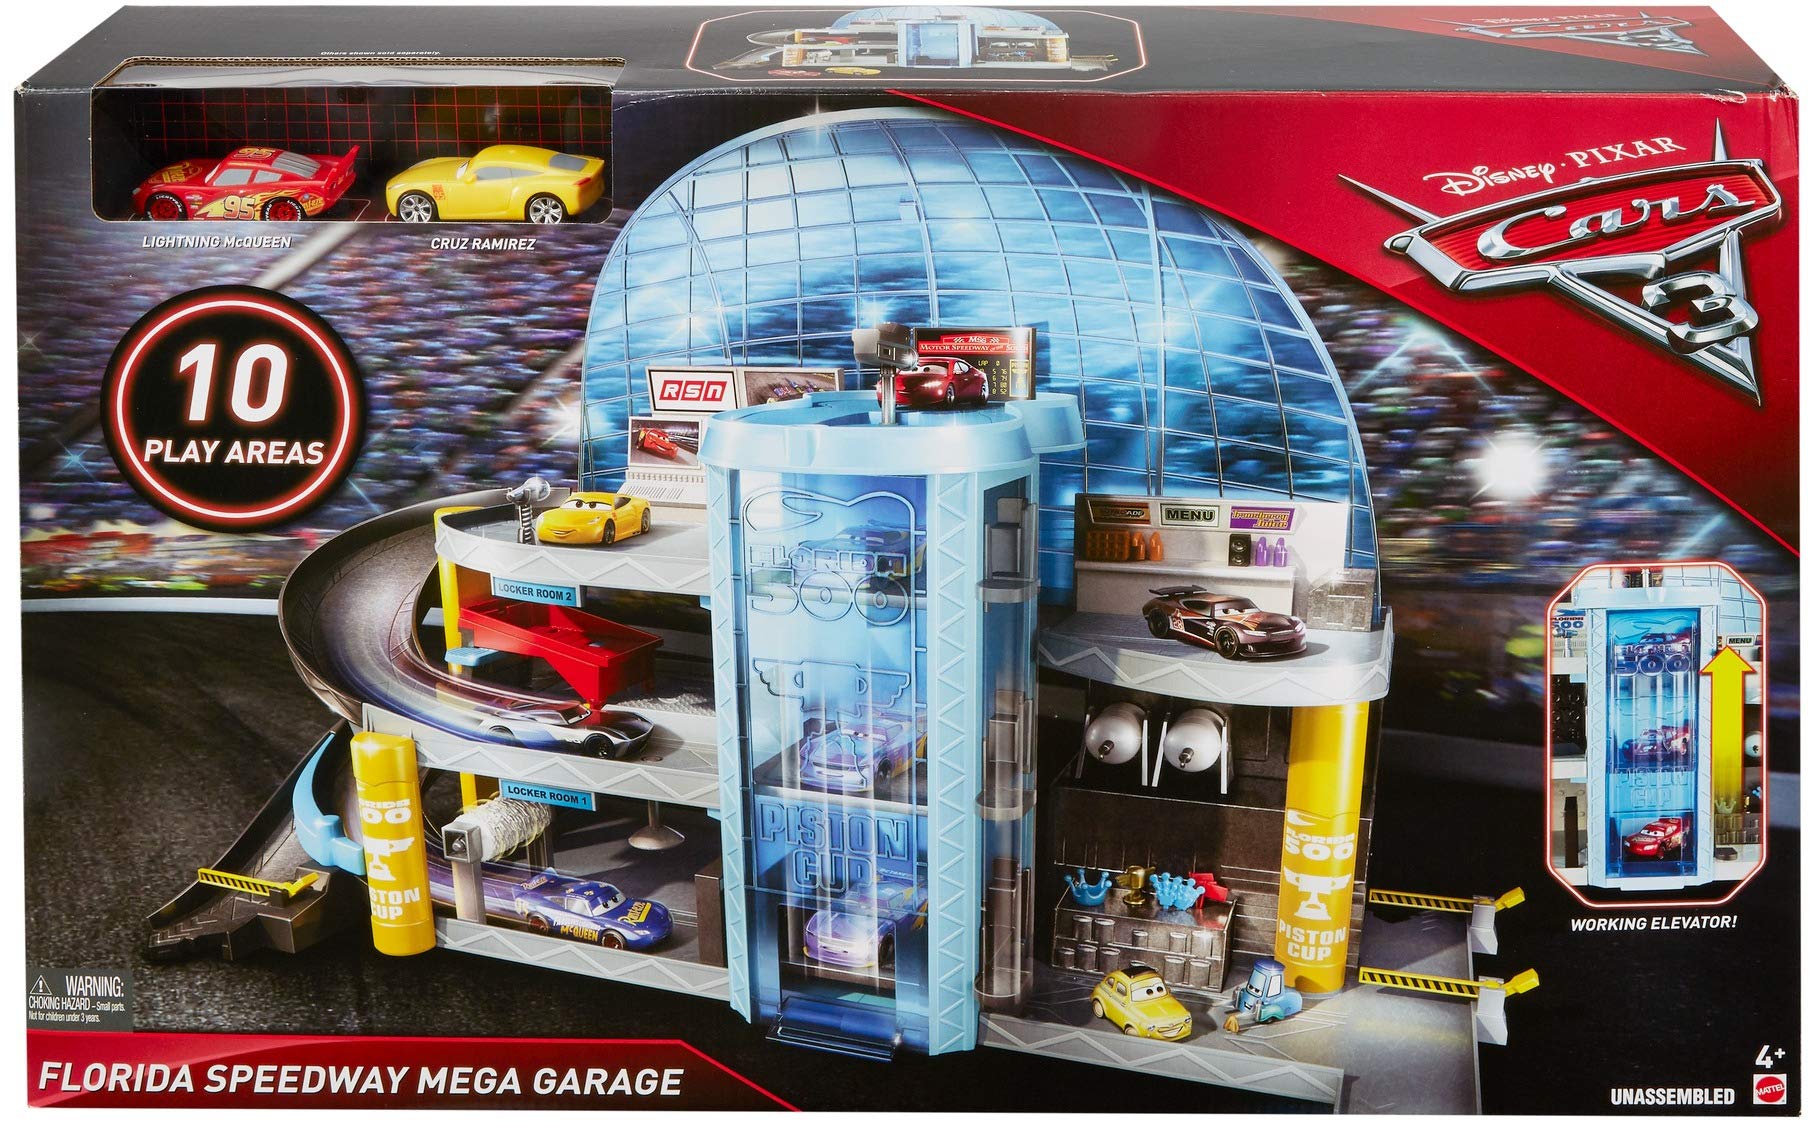 Disney Cars Toys Garage Playset with Lightning Mcqueen & Cruz Ramirez Toy Cars, Florida Speedway MEGA 3-Level Garage